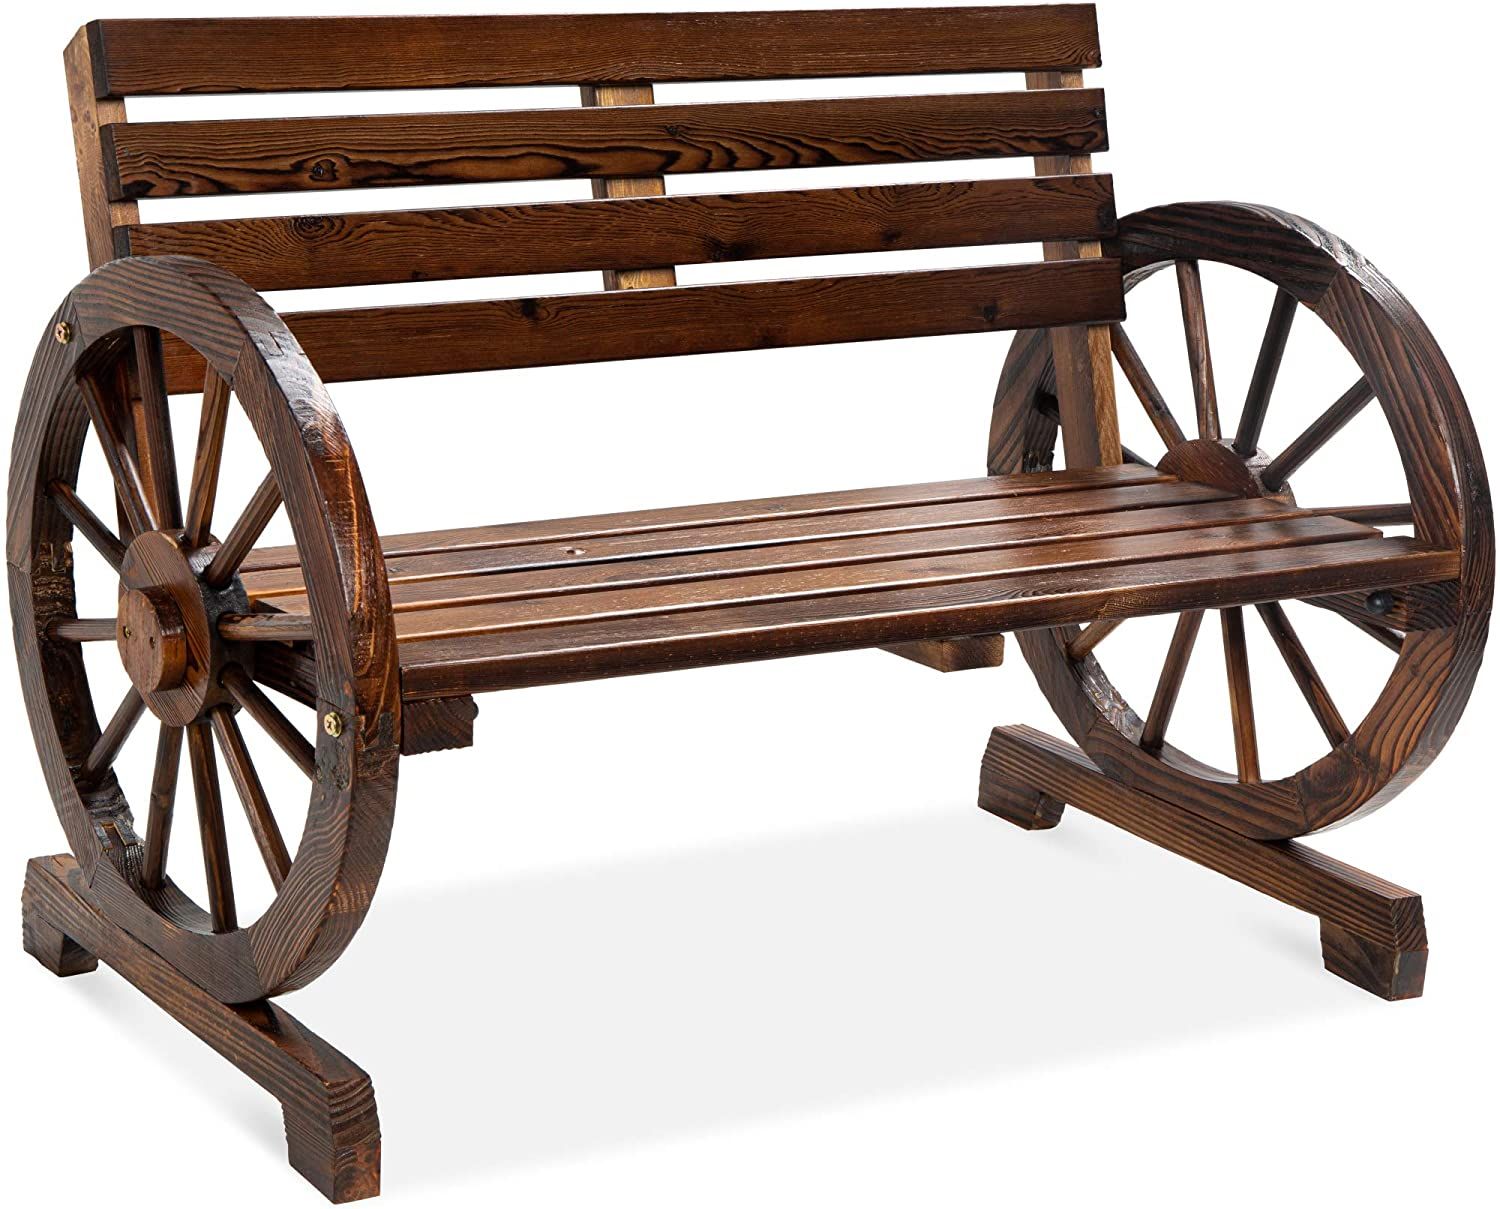 Wooden Wagon Wheel Bench - $$title$$